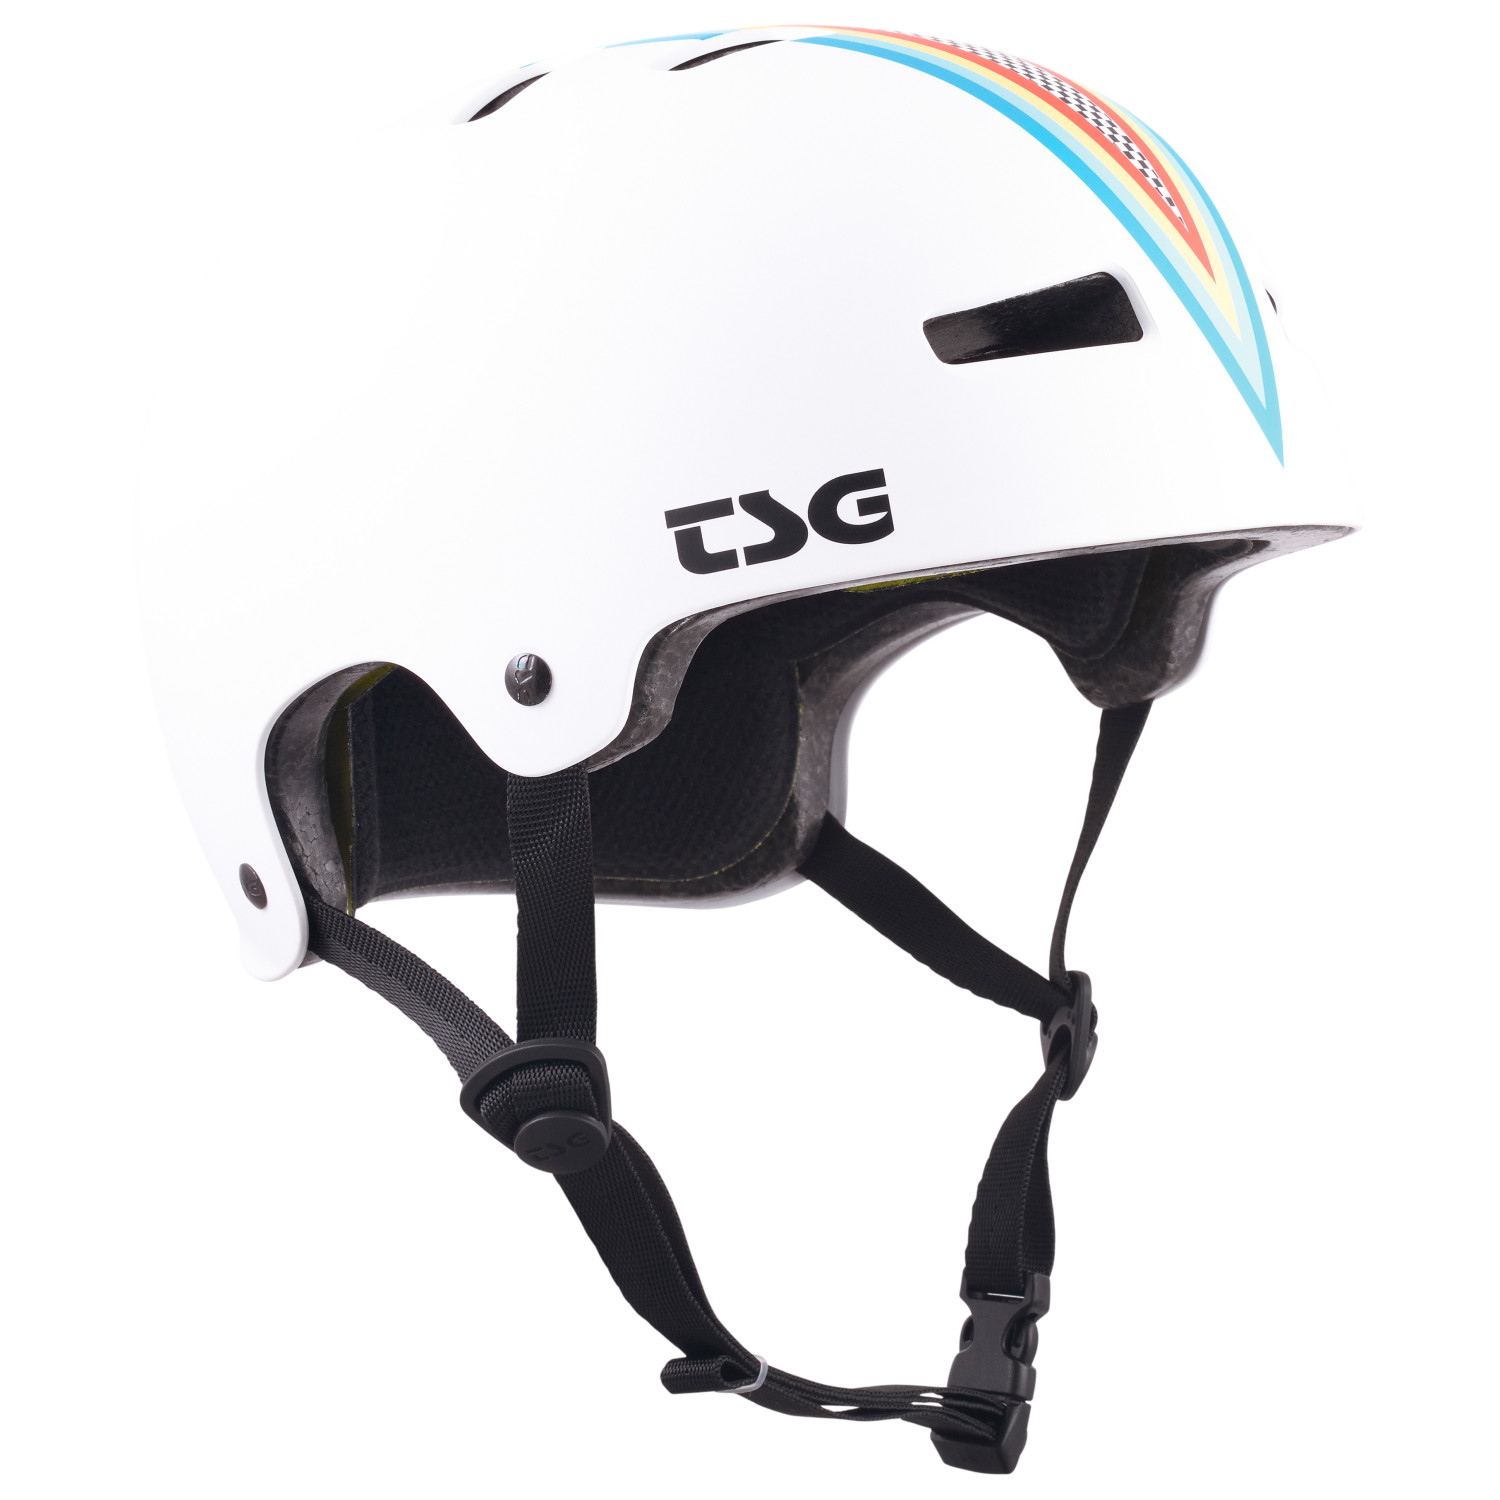 цена Велосипедный шлем Tsg Evolution Graphic Design, цвет Pintail